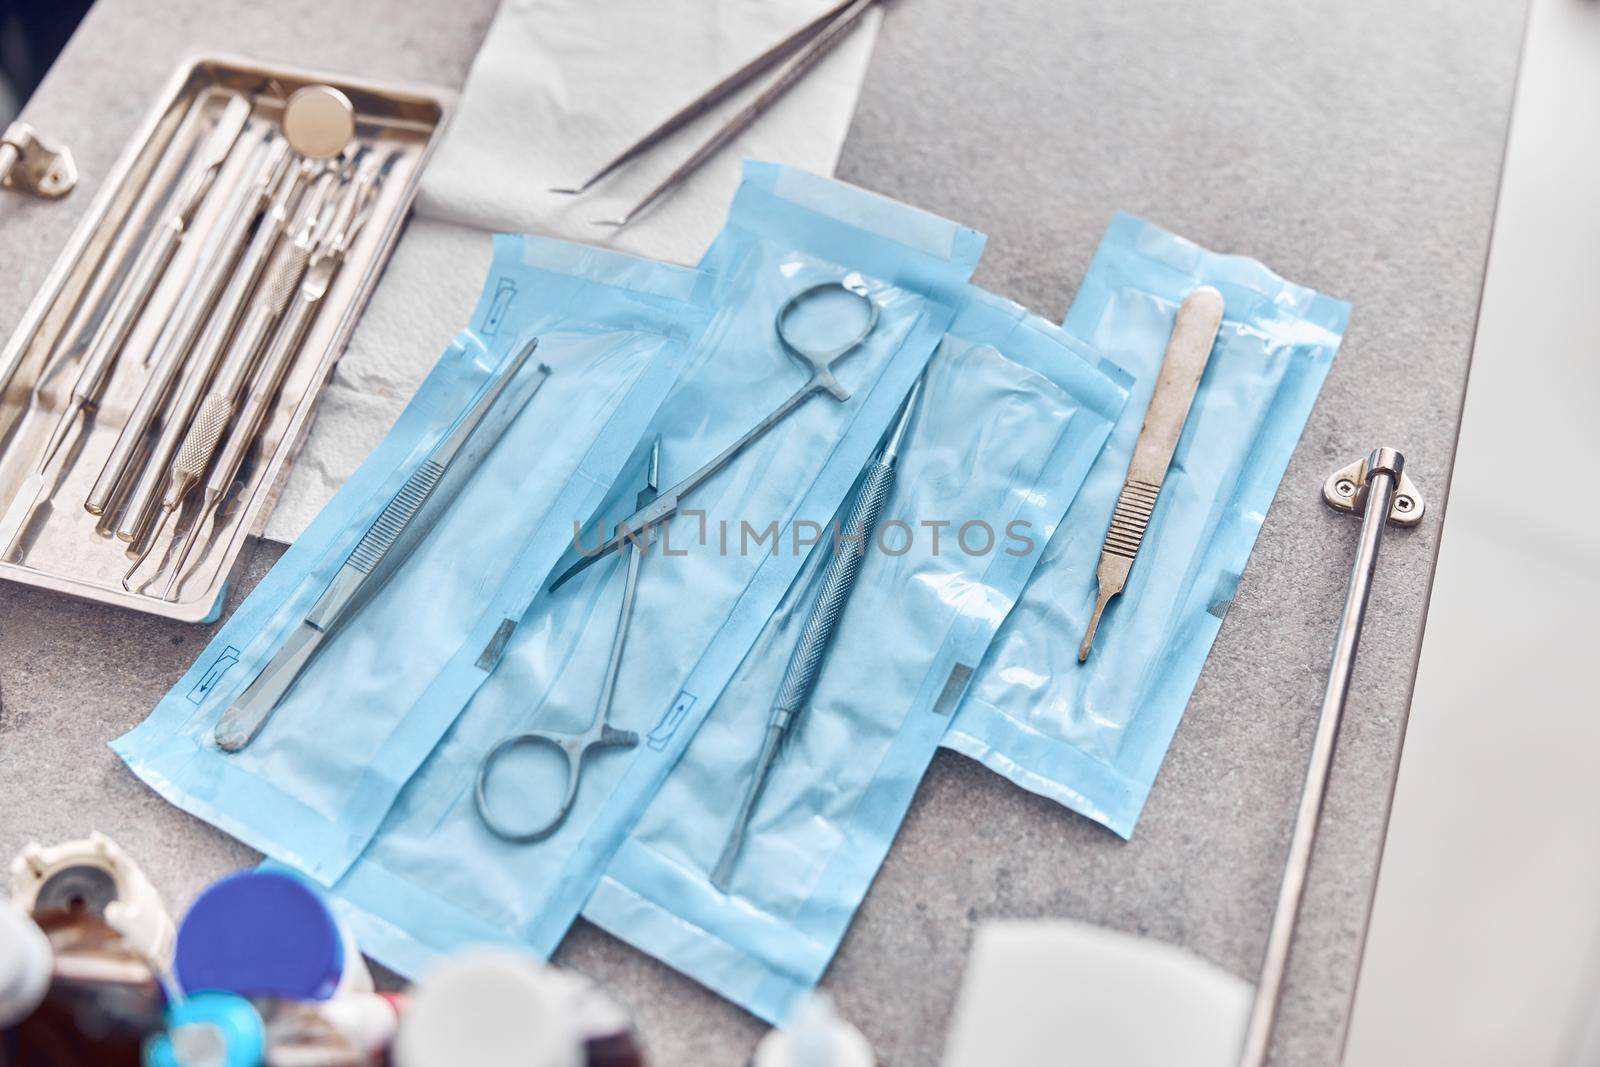 Dental professional equipment on a table of modern clinic by Yaroslav_astakhov